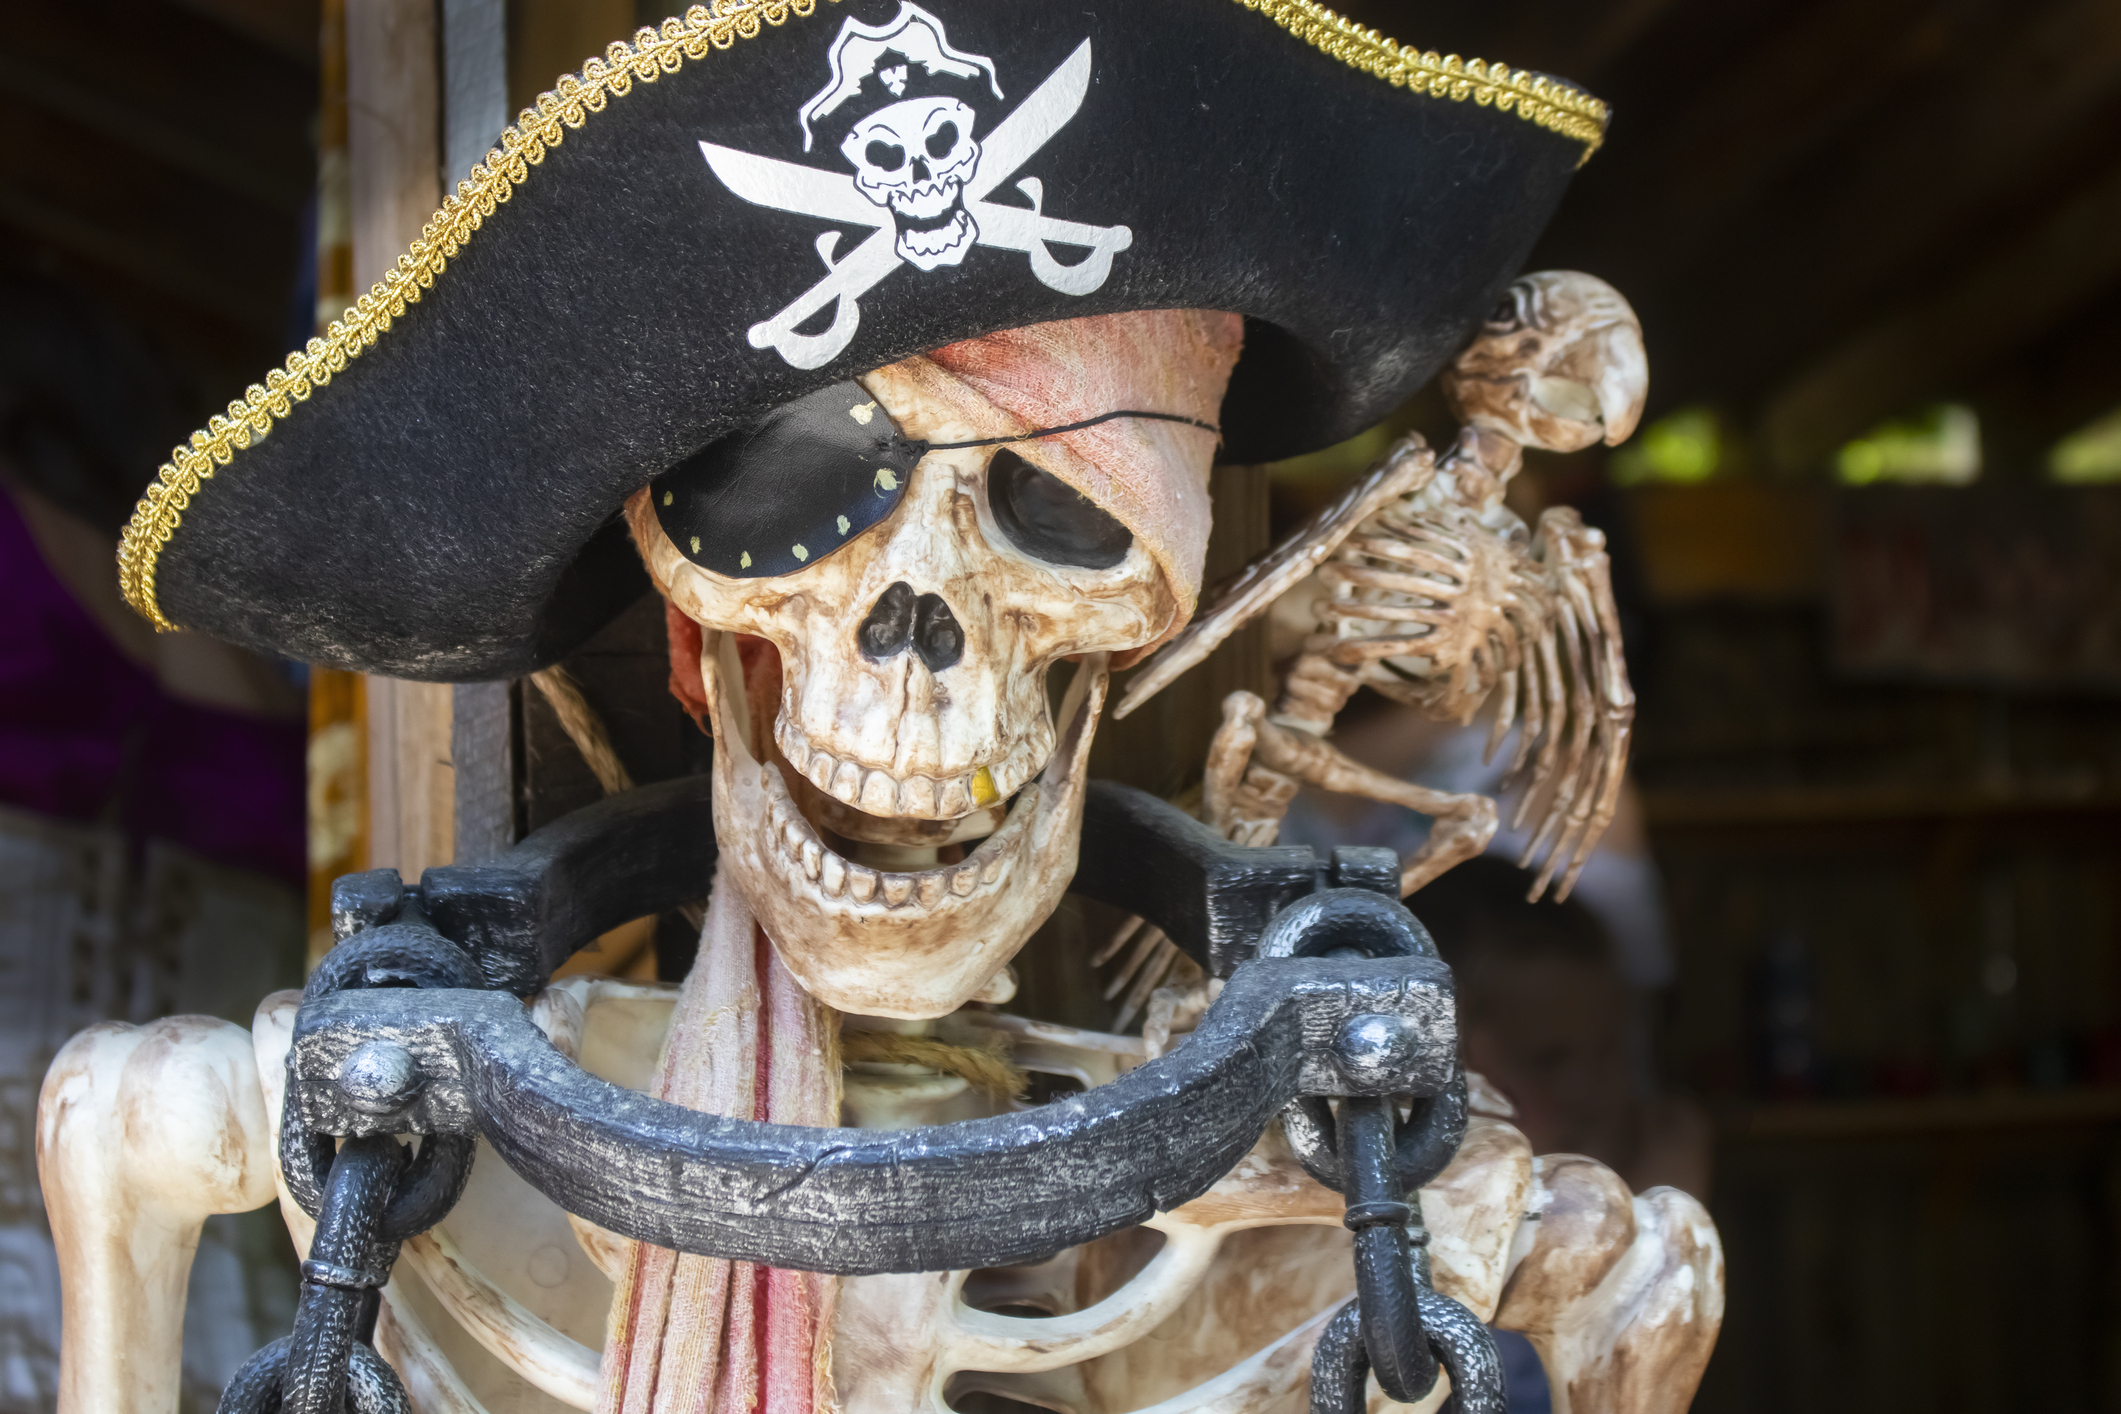 Epic Halloween decorations in Bay Village showcase massive pirate ship